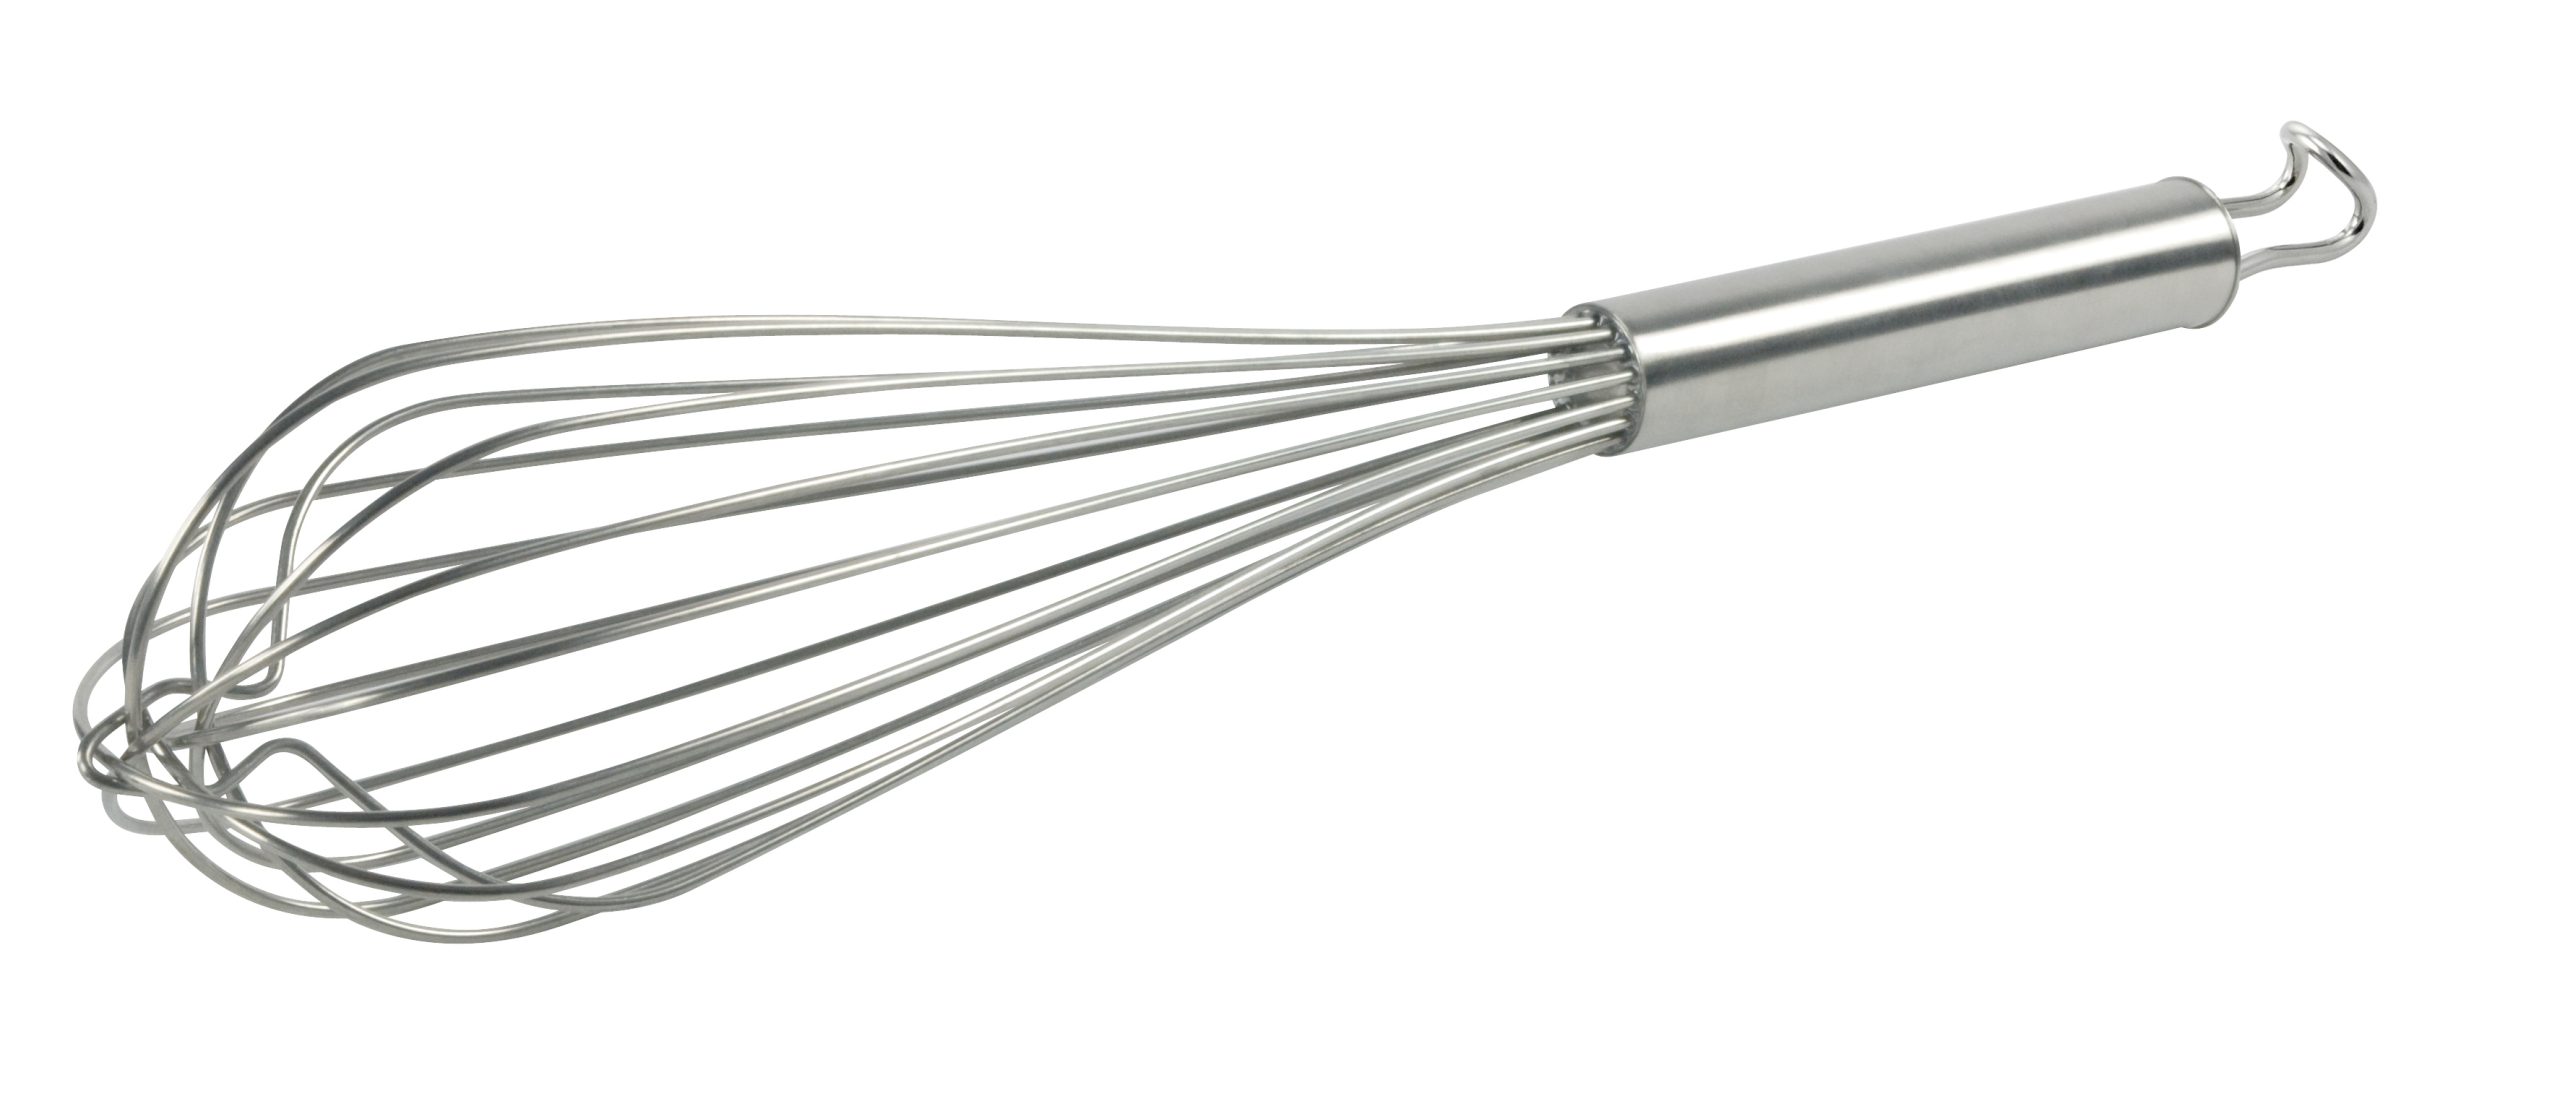 Professional Kitchen whisk 8 wires / 35 cm - Stainless steel 18/10 ILSA